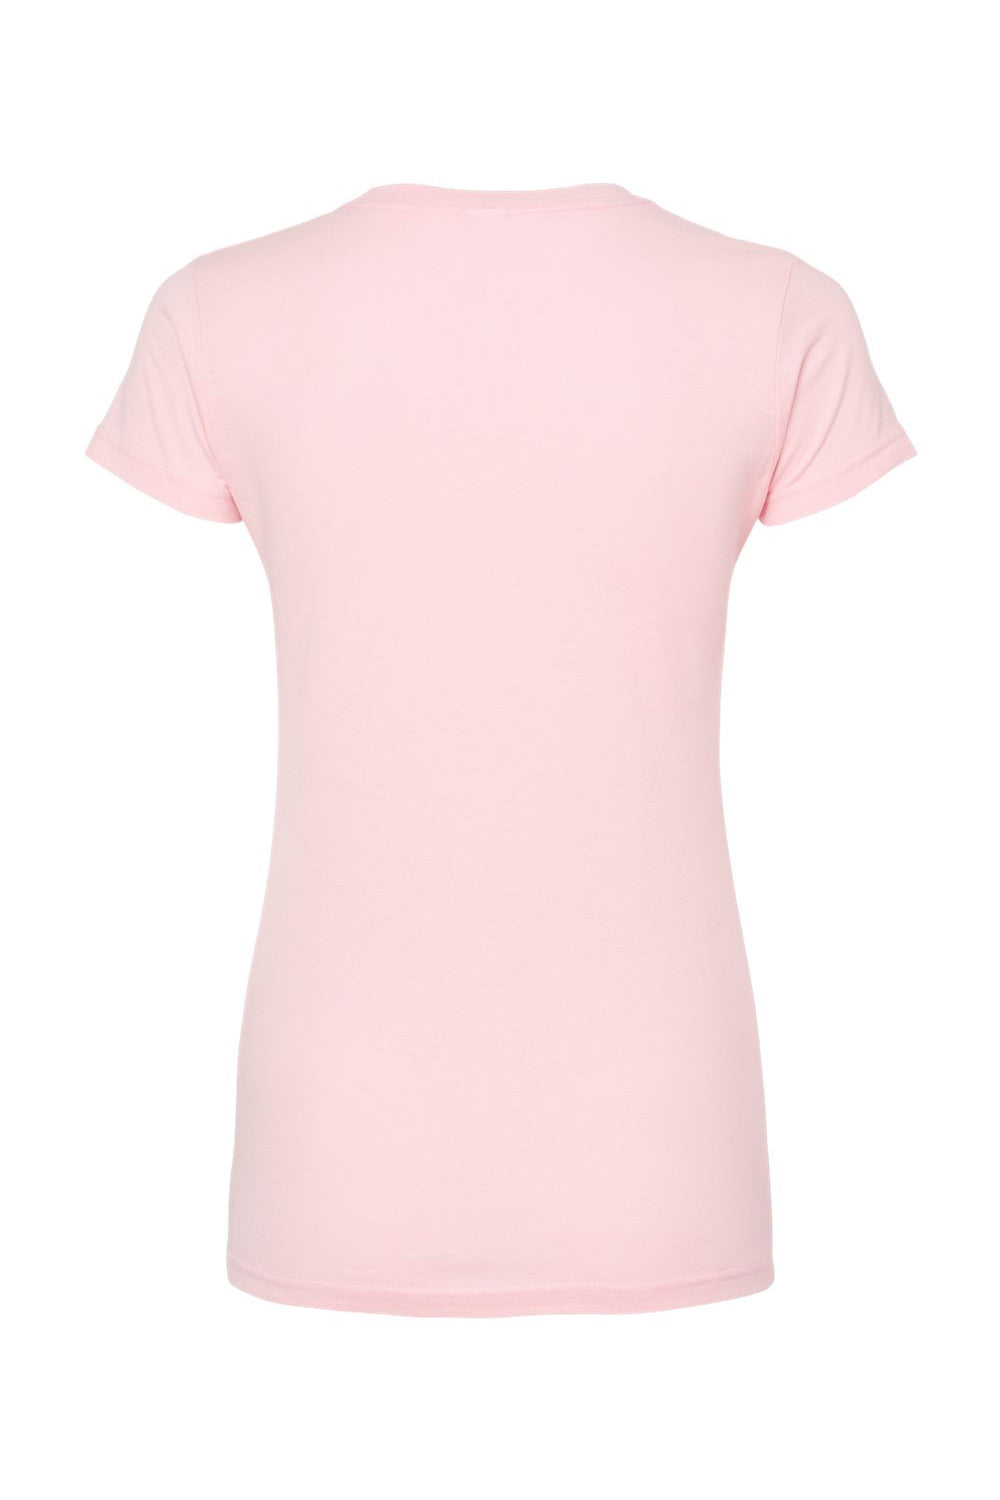 Tultex 213 Womens Fine Jersey Slim Fit Short Sleeve Crewneck T-Shirt Pink Flat Back